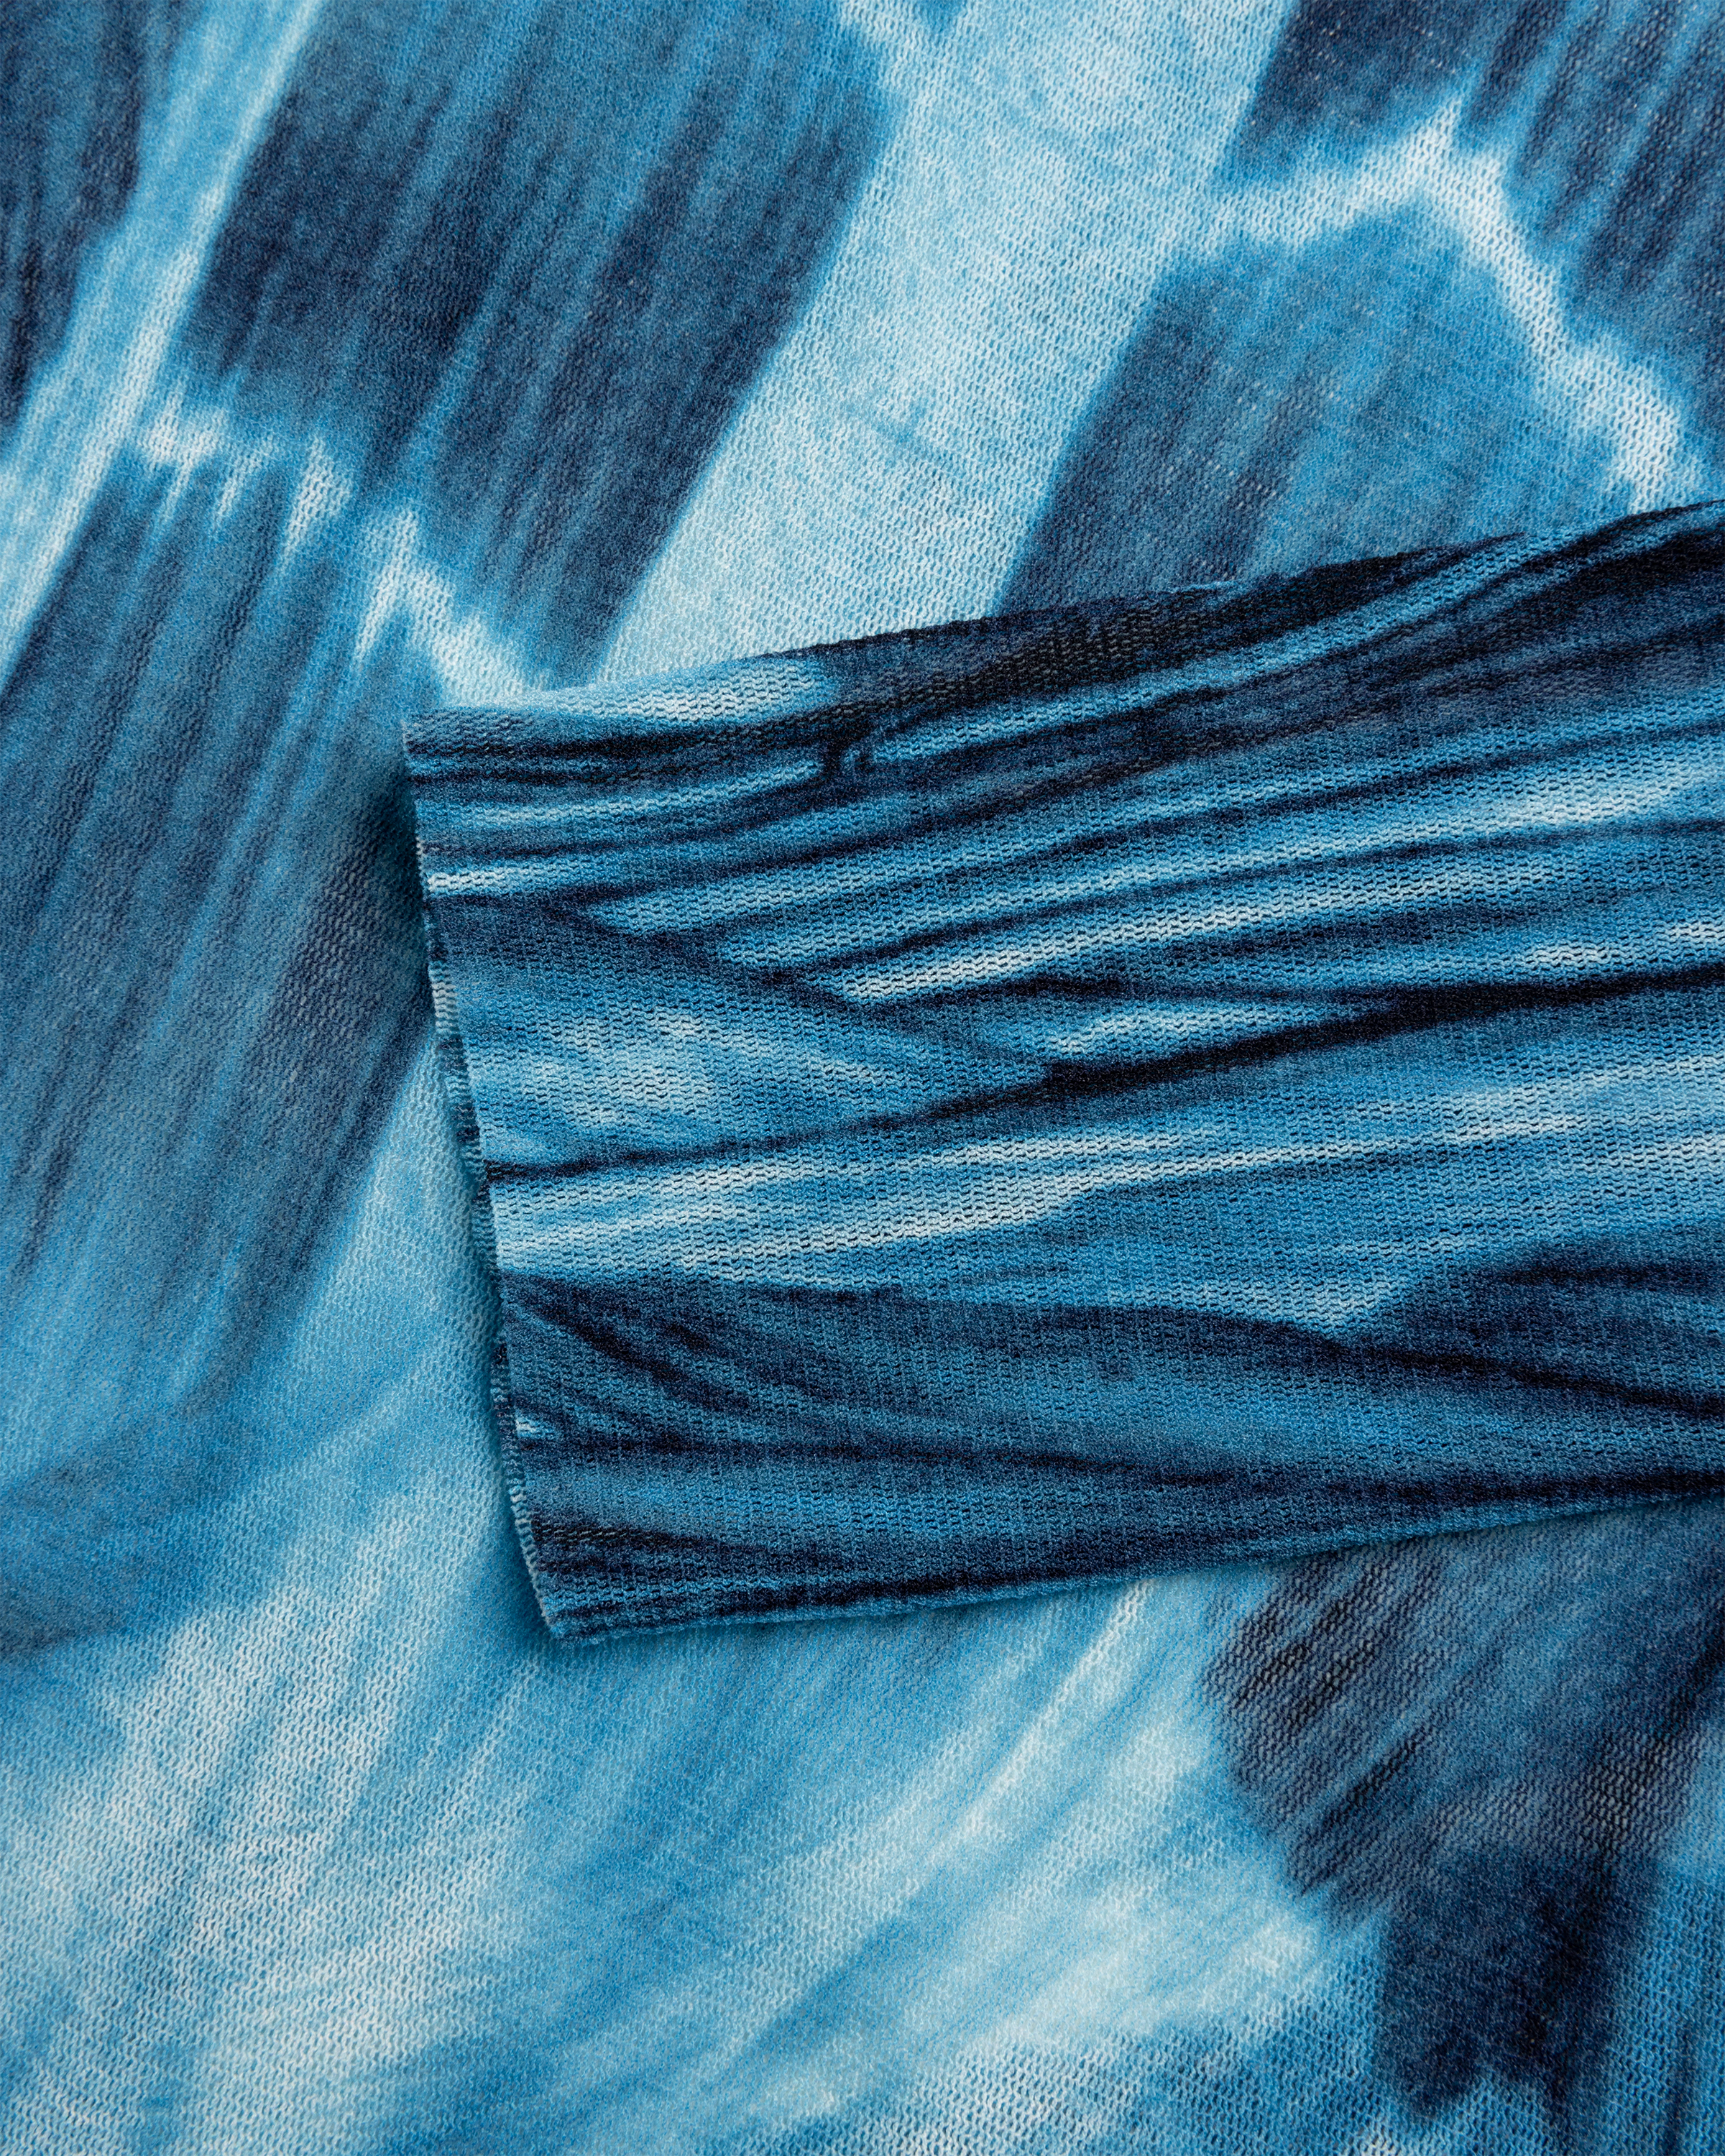 Jean Paul Gaultier – Mesh Long-Sleeve Top Printed "Ecorche" Blue/Light blue/White - Longsleeves - Blue - Image 7